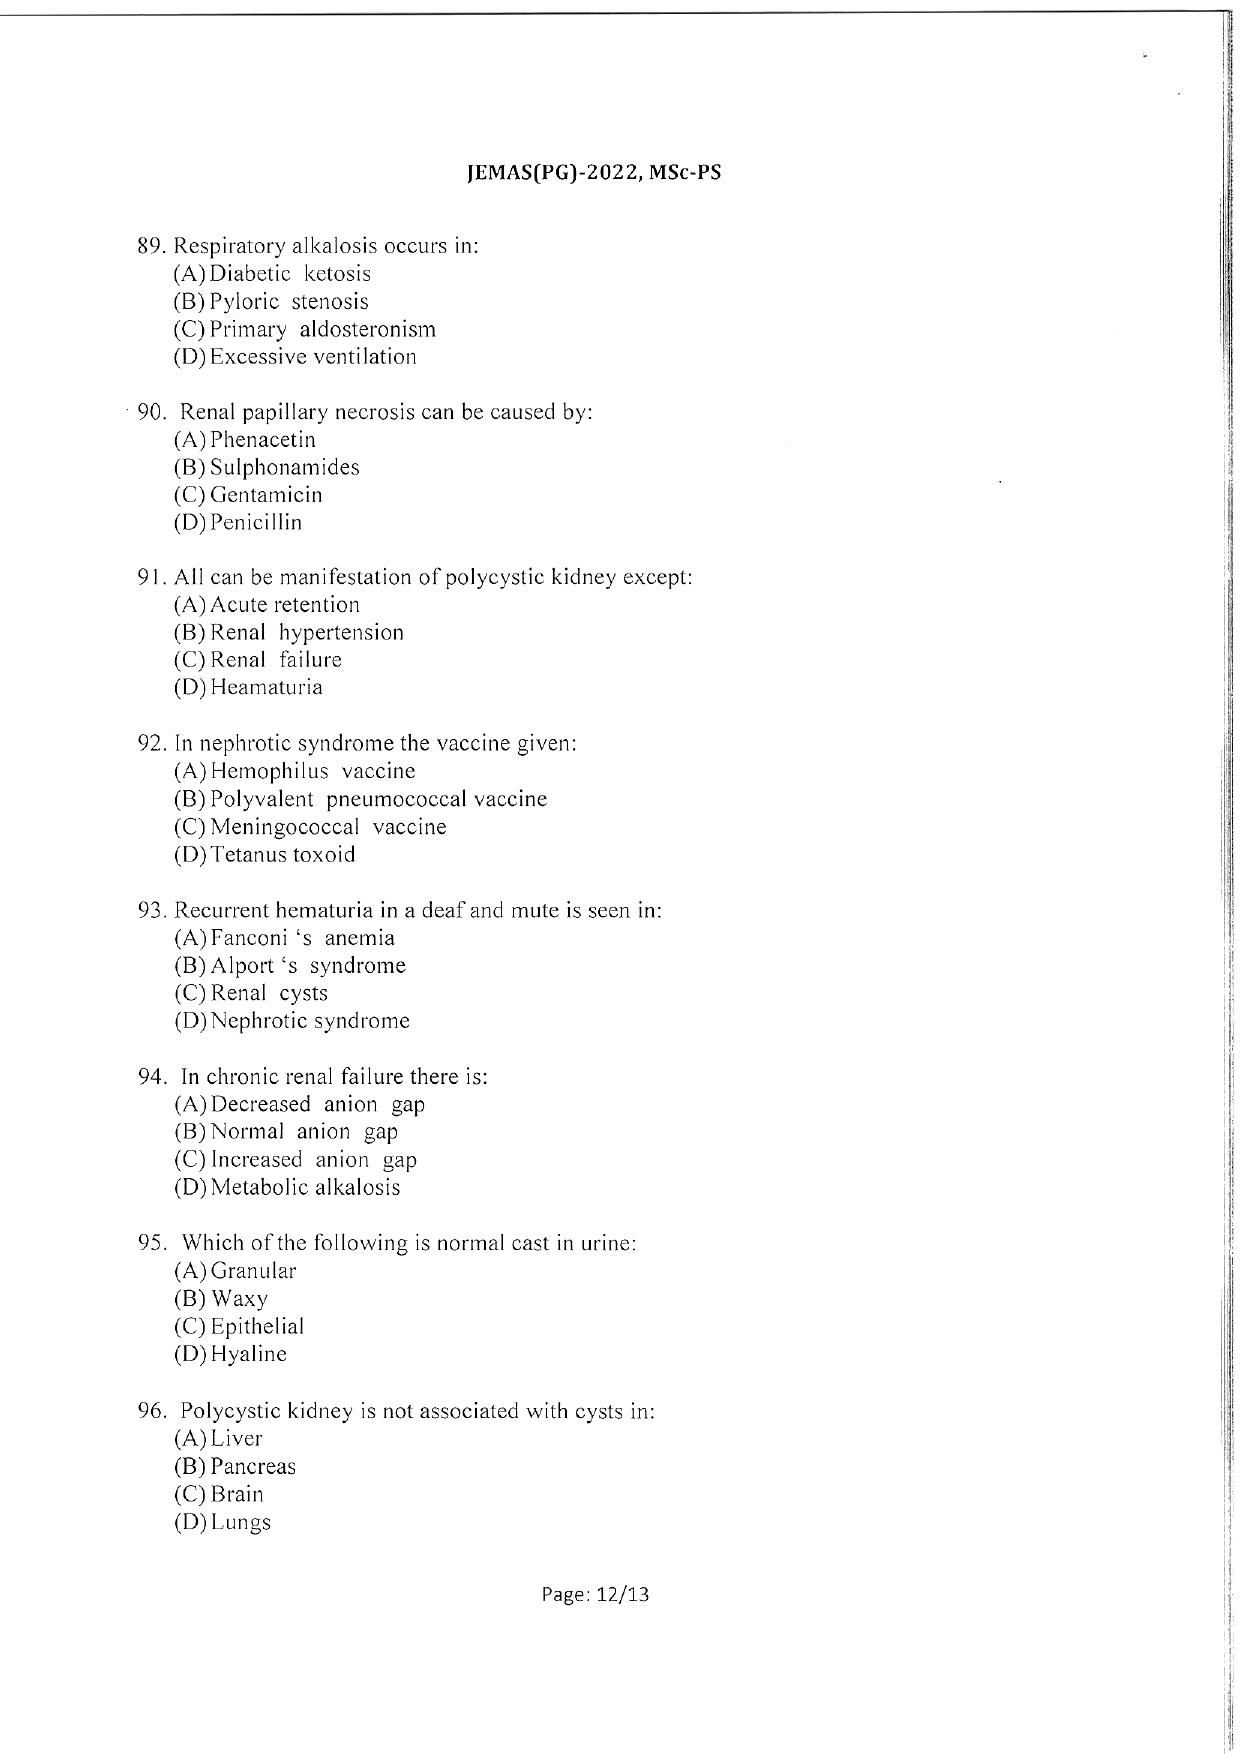 WBJEEB JEMAS (PG) 2022 MSc PS Question Paper - Page 14